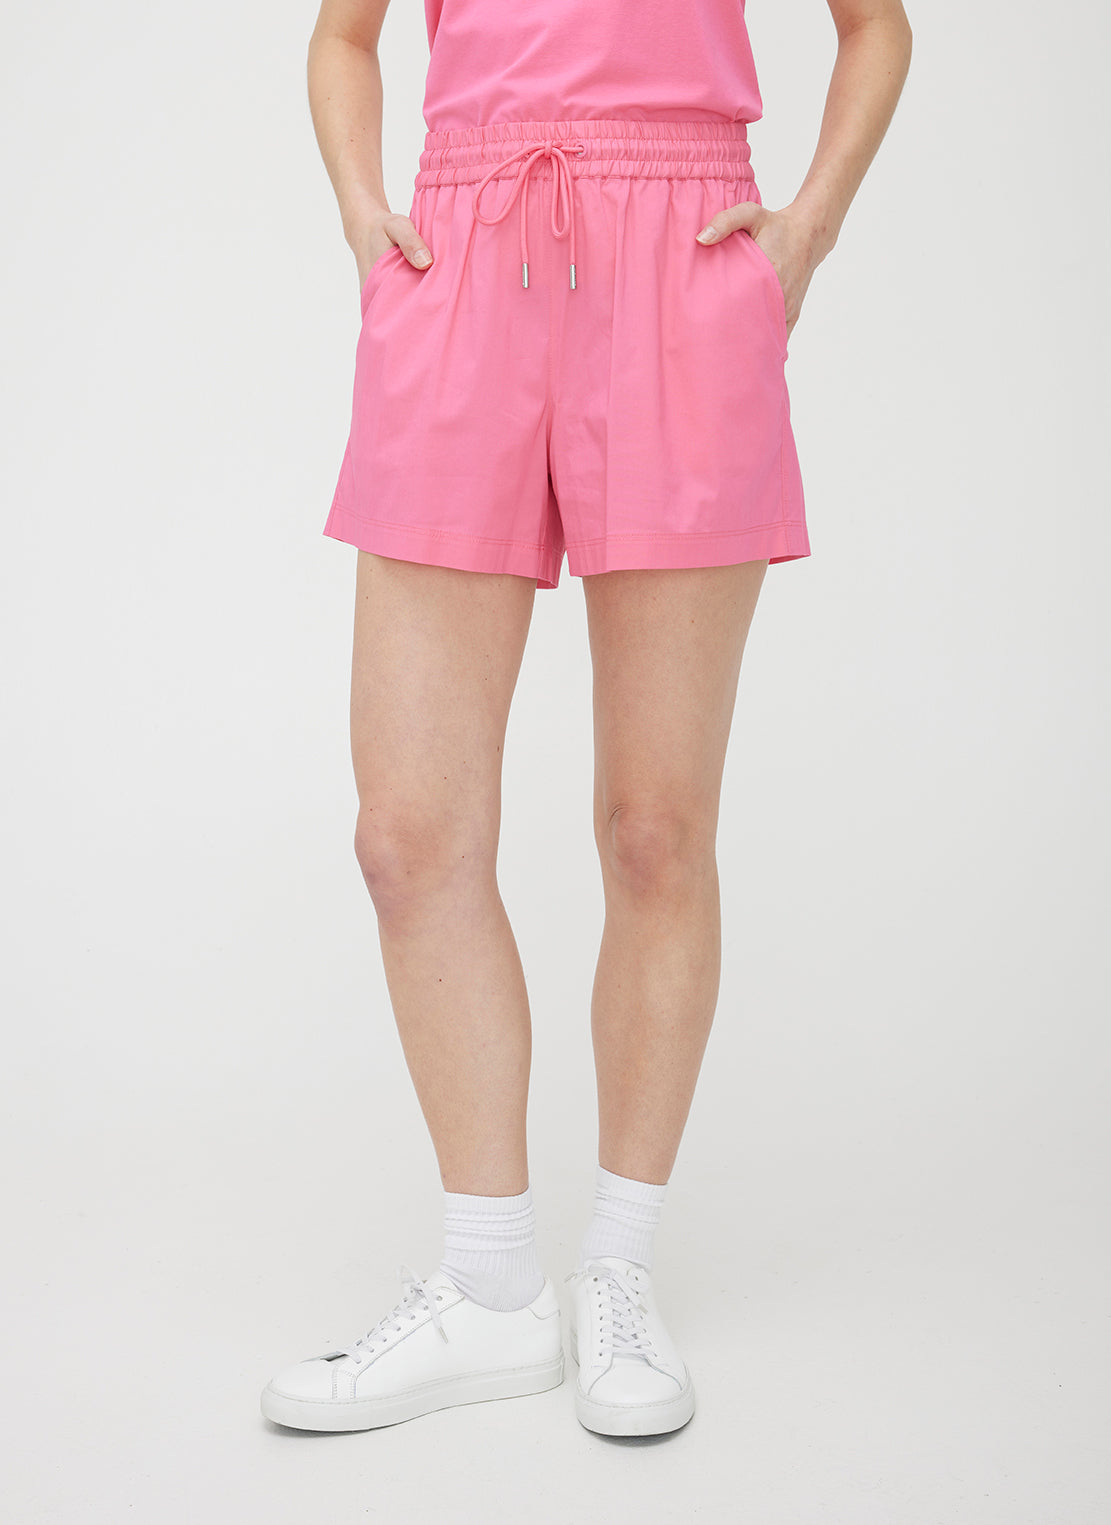 Kit and Ace — Marbella Elastic Poplin Shorts